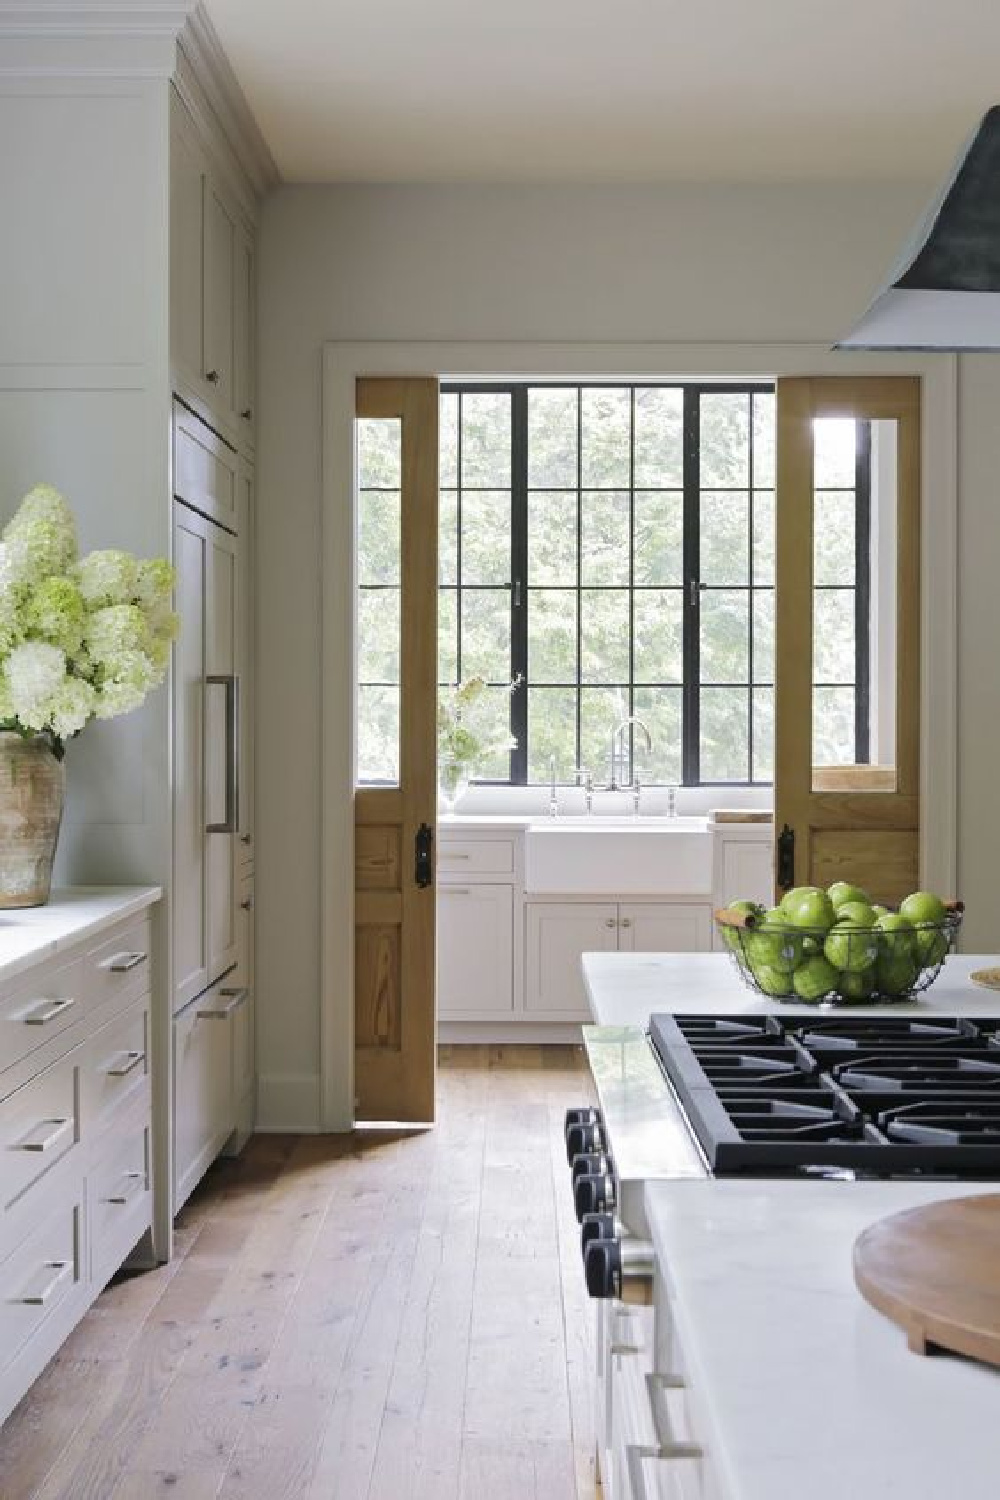 Rachel Halvorson kitchen with pocket doors, farm sink, and black windows.